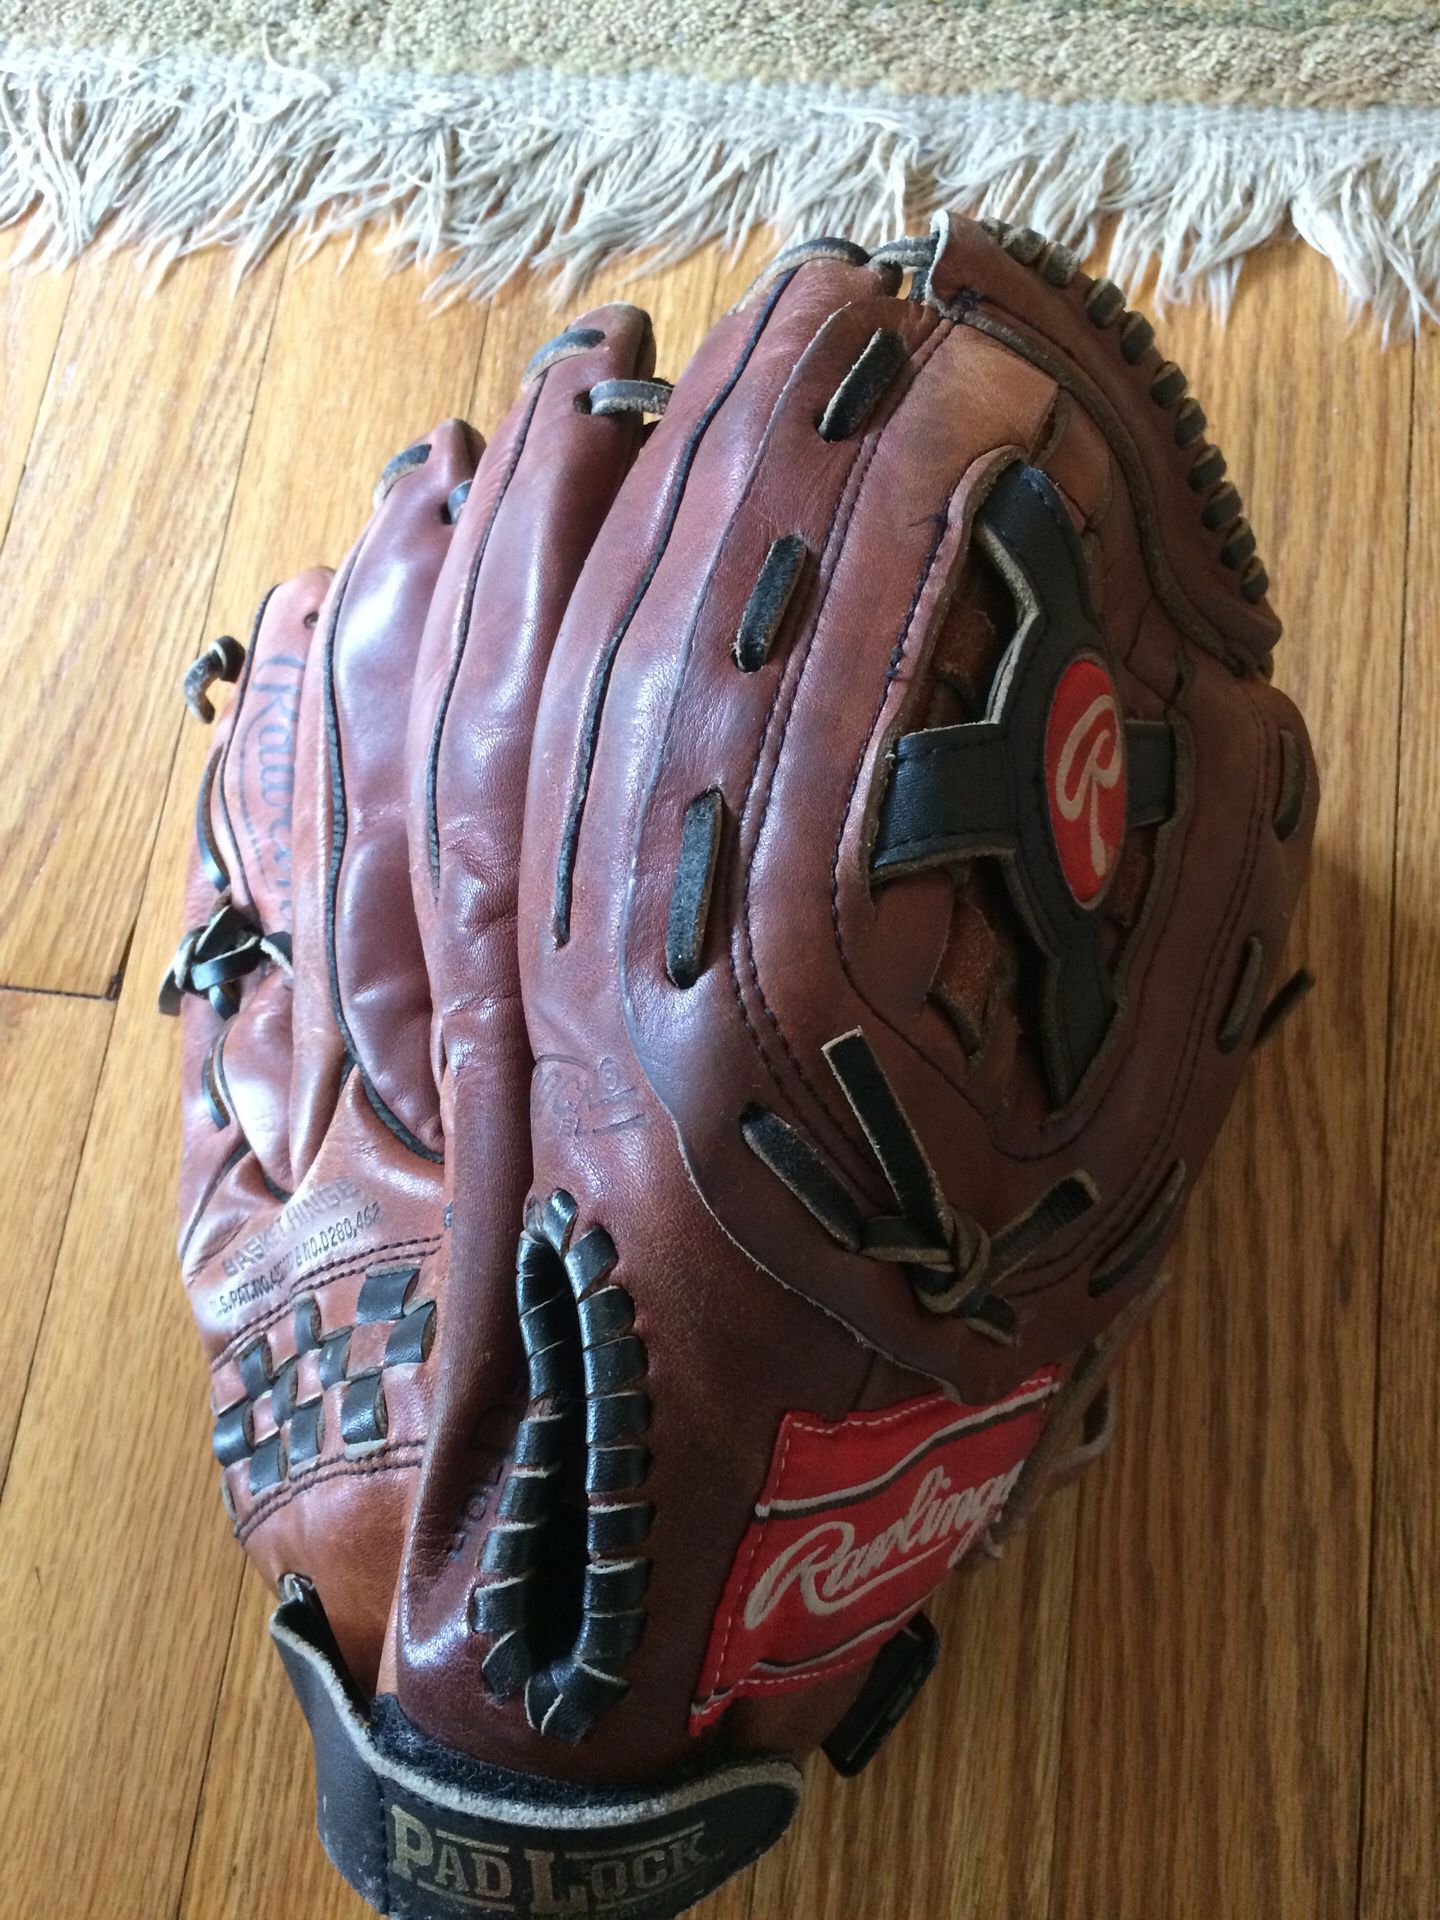 Rawlings RPT4 baseball/softball glove